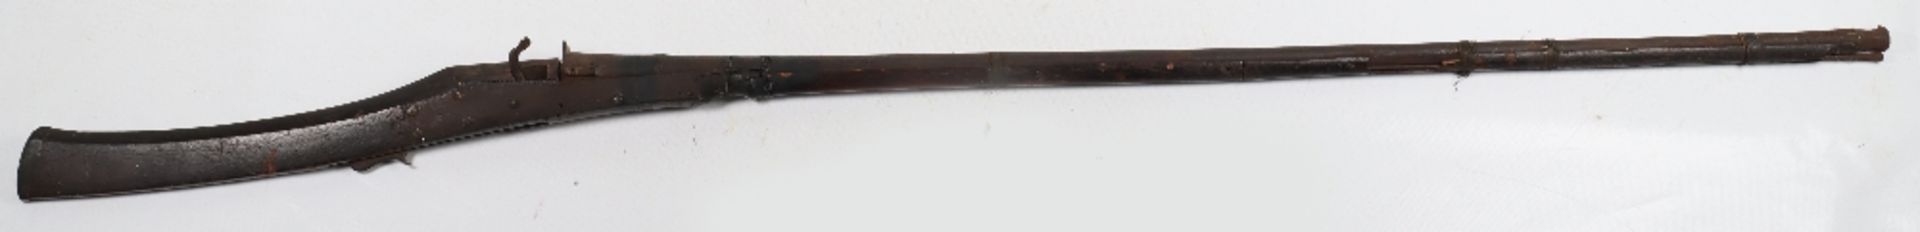 Early 19th Century Indian Matchlock Gun Torador - Image 9 of 9